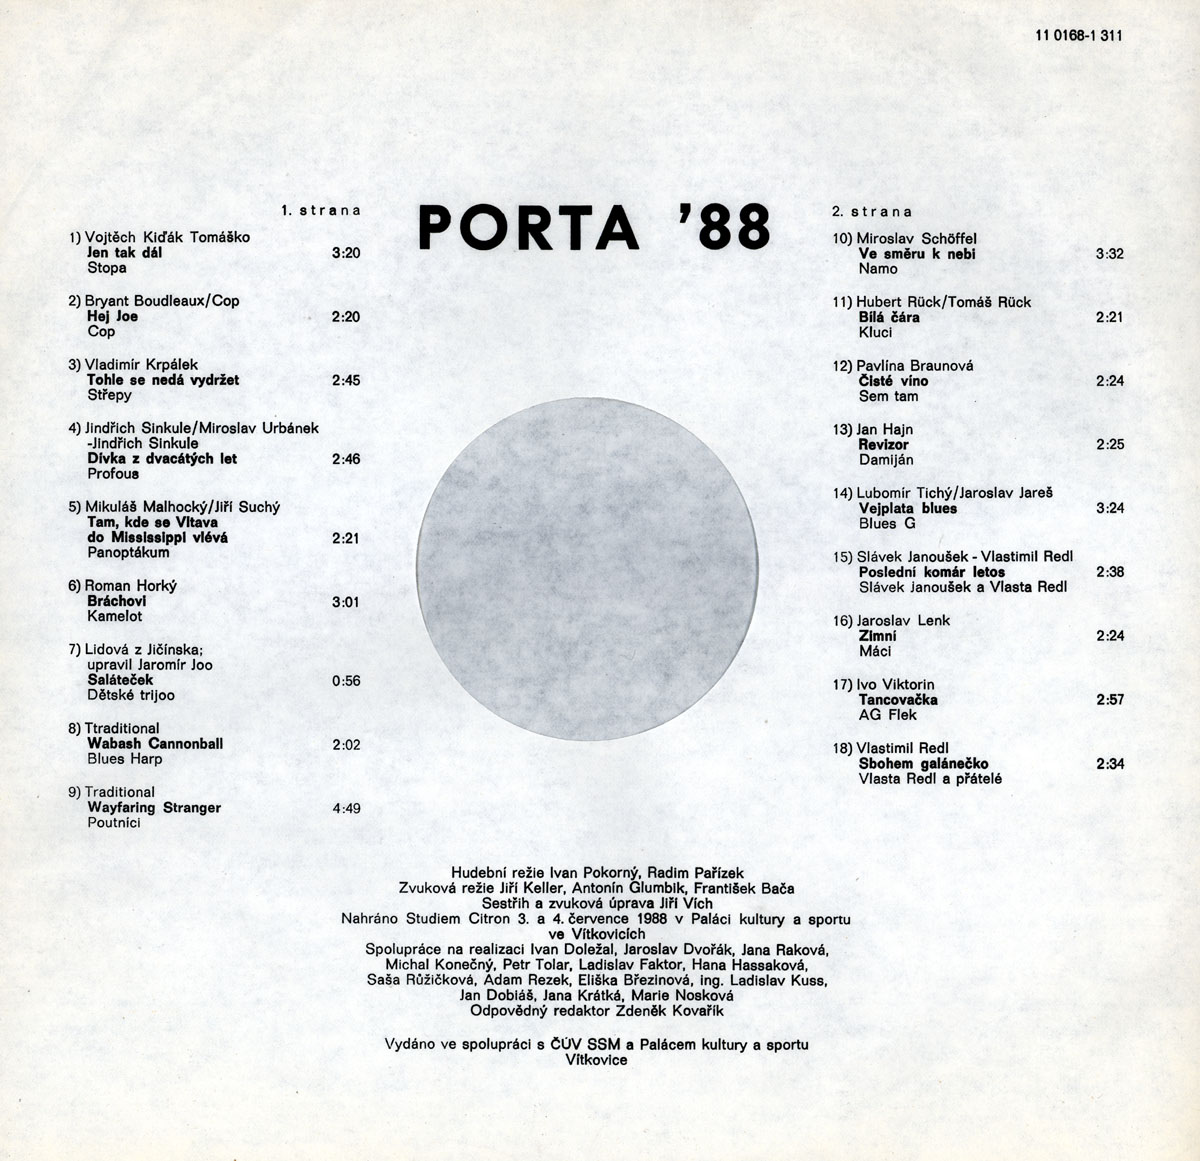 PORTA 88